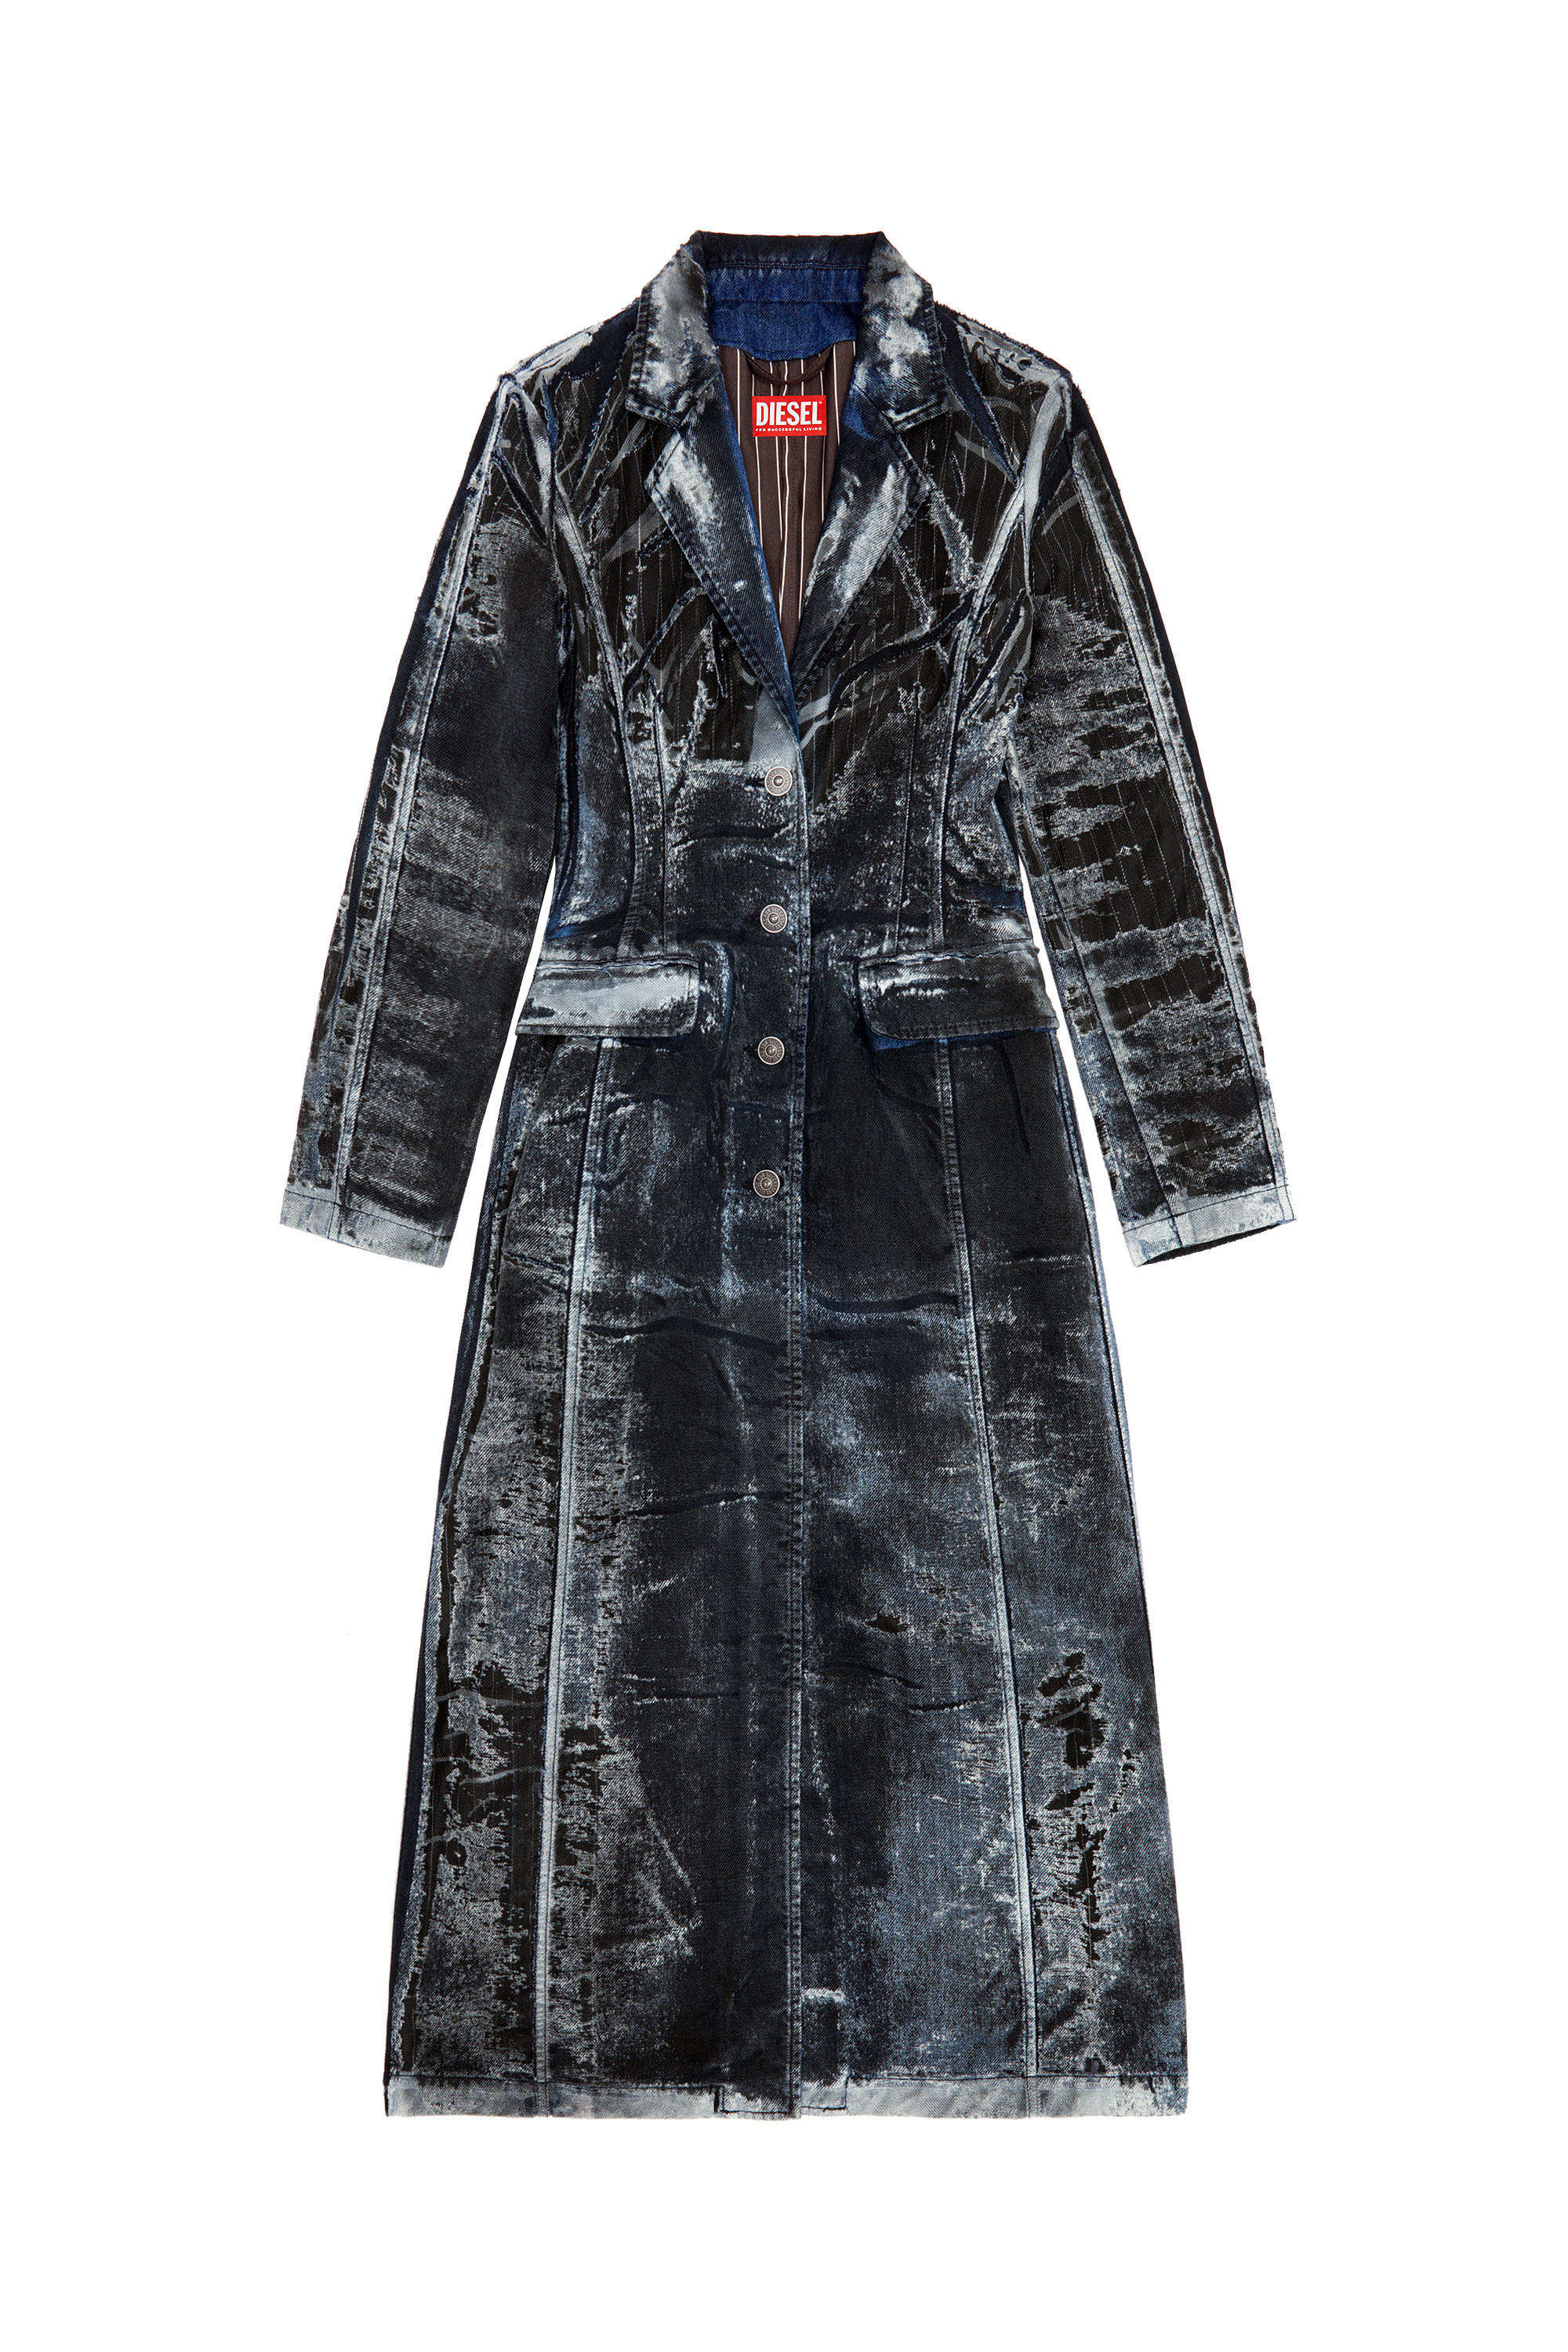 Diesel - DE-PIA-FSE, Woman Coat in pinstriped devoré denim in Multicolor - Image 2